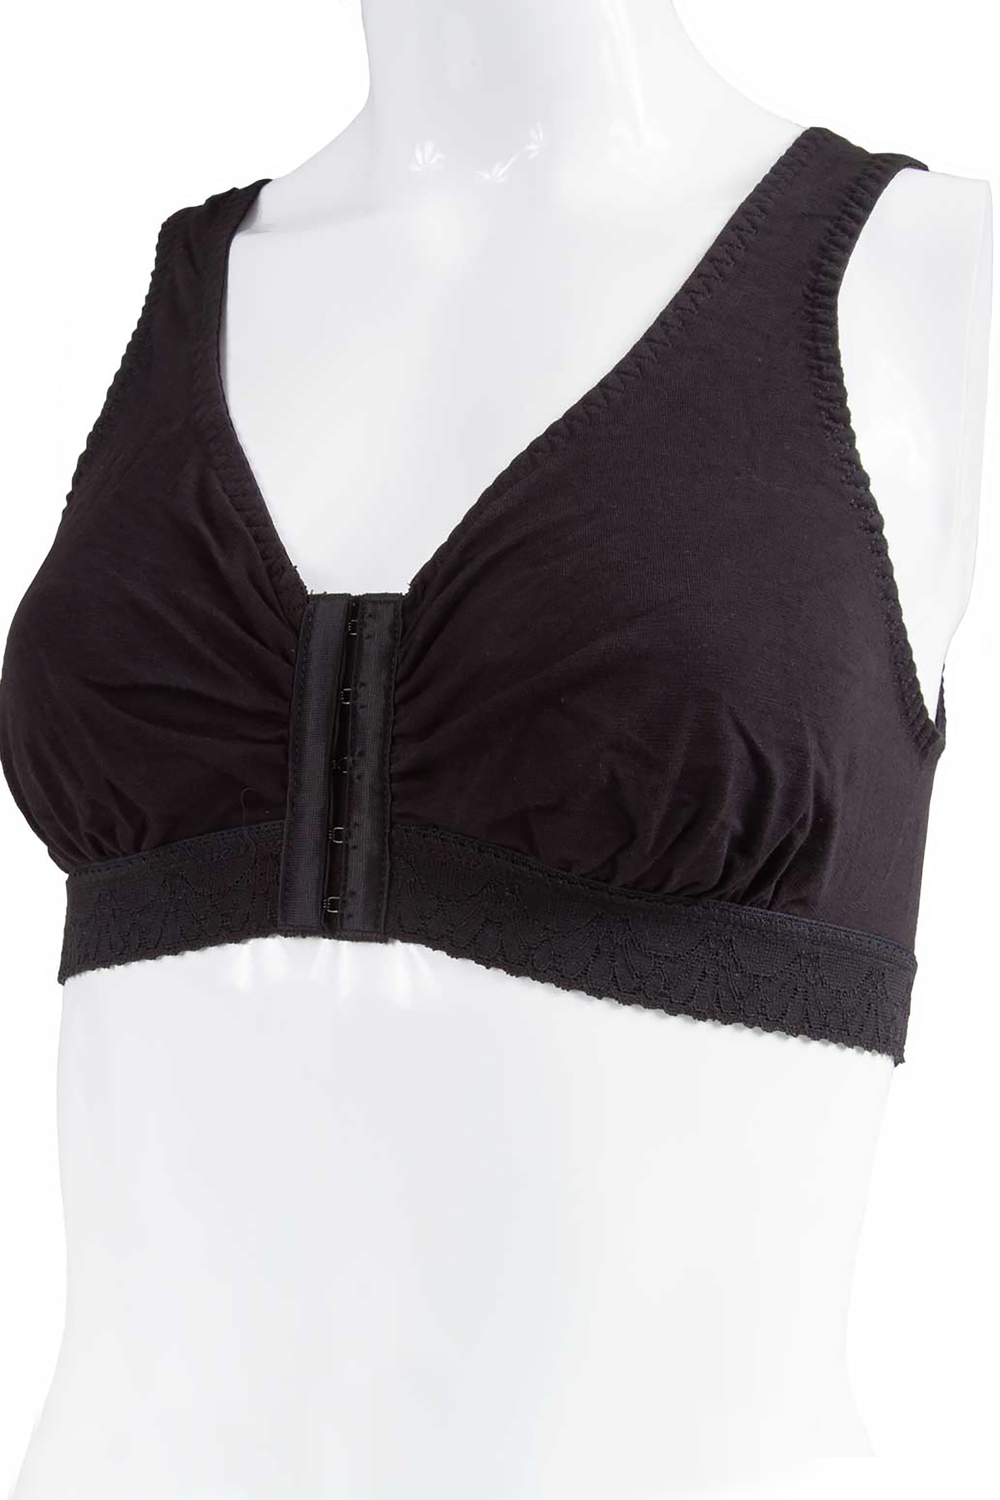 Carole Martin - Cotton Comfort bra, black, 36. Colour: black. Size